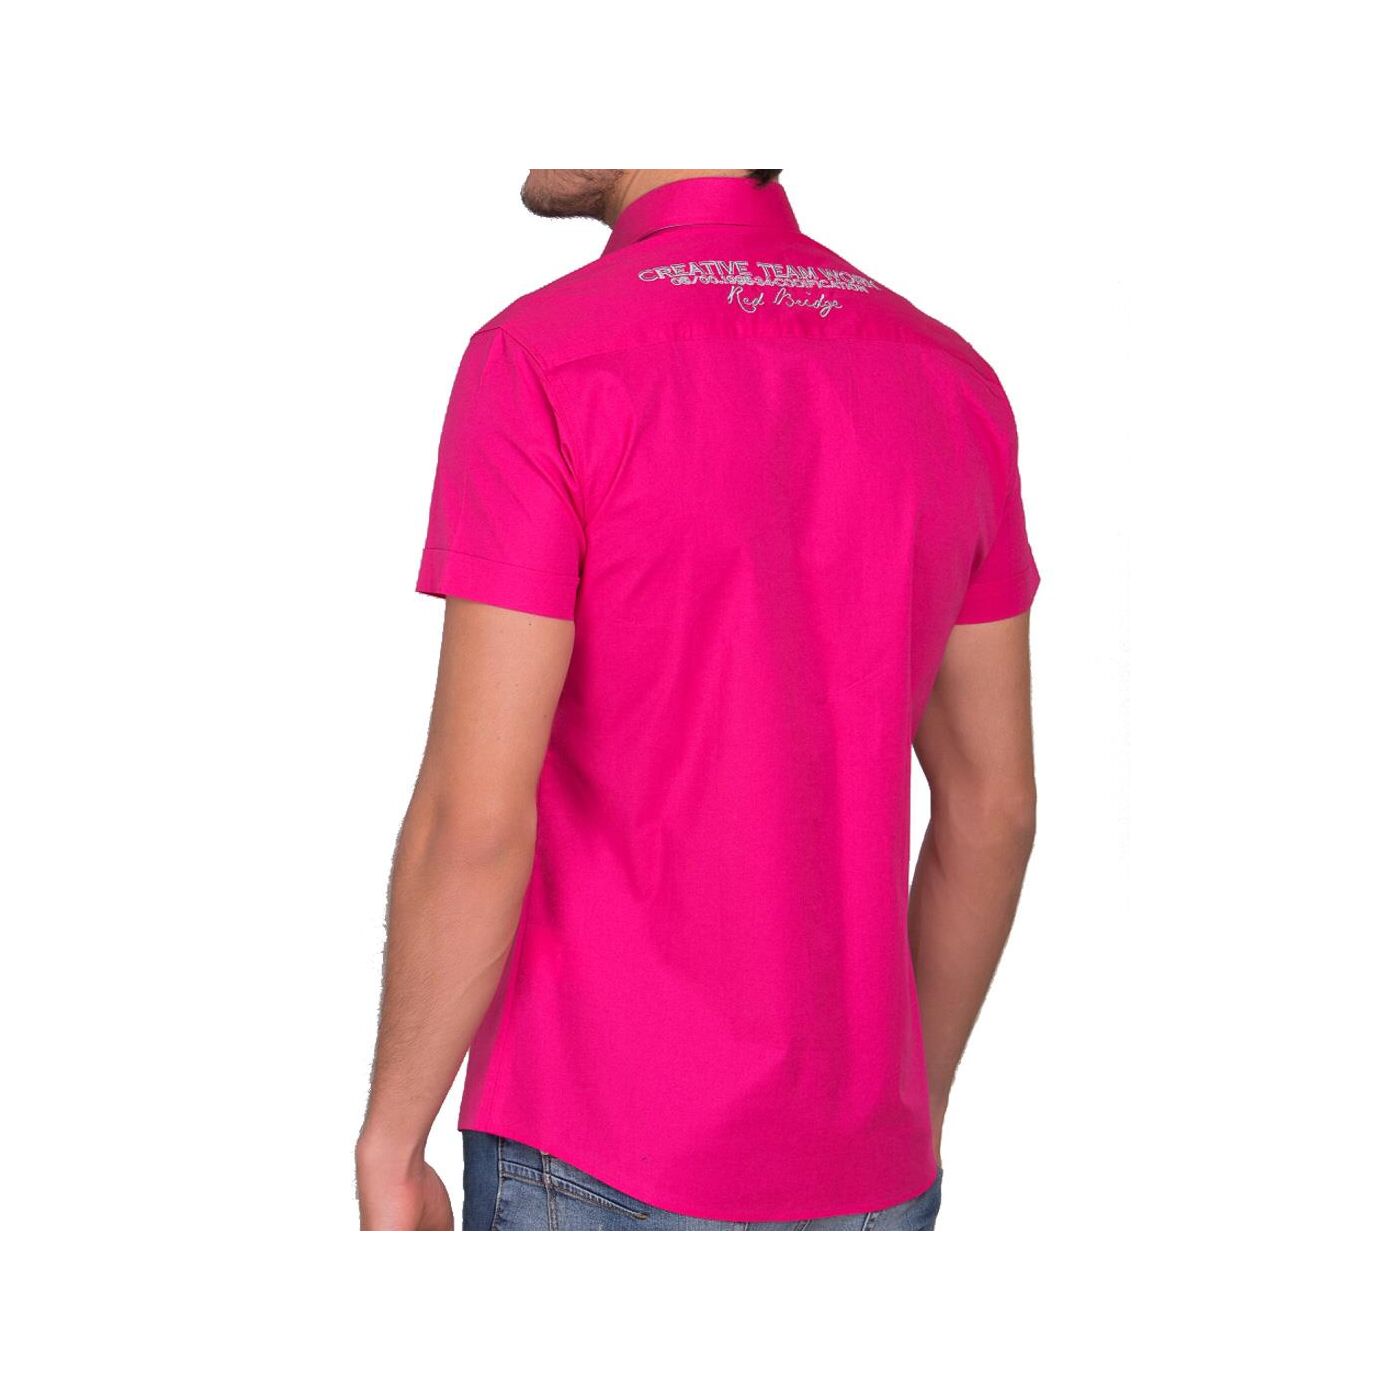 Wasabi Kurzarm Hemd Freizeithemd Herren Designer Shirt Slim-Fit NEU Rosa L 